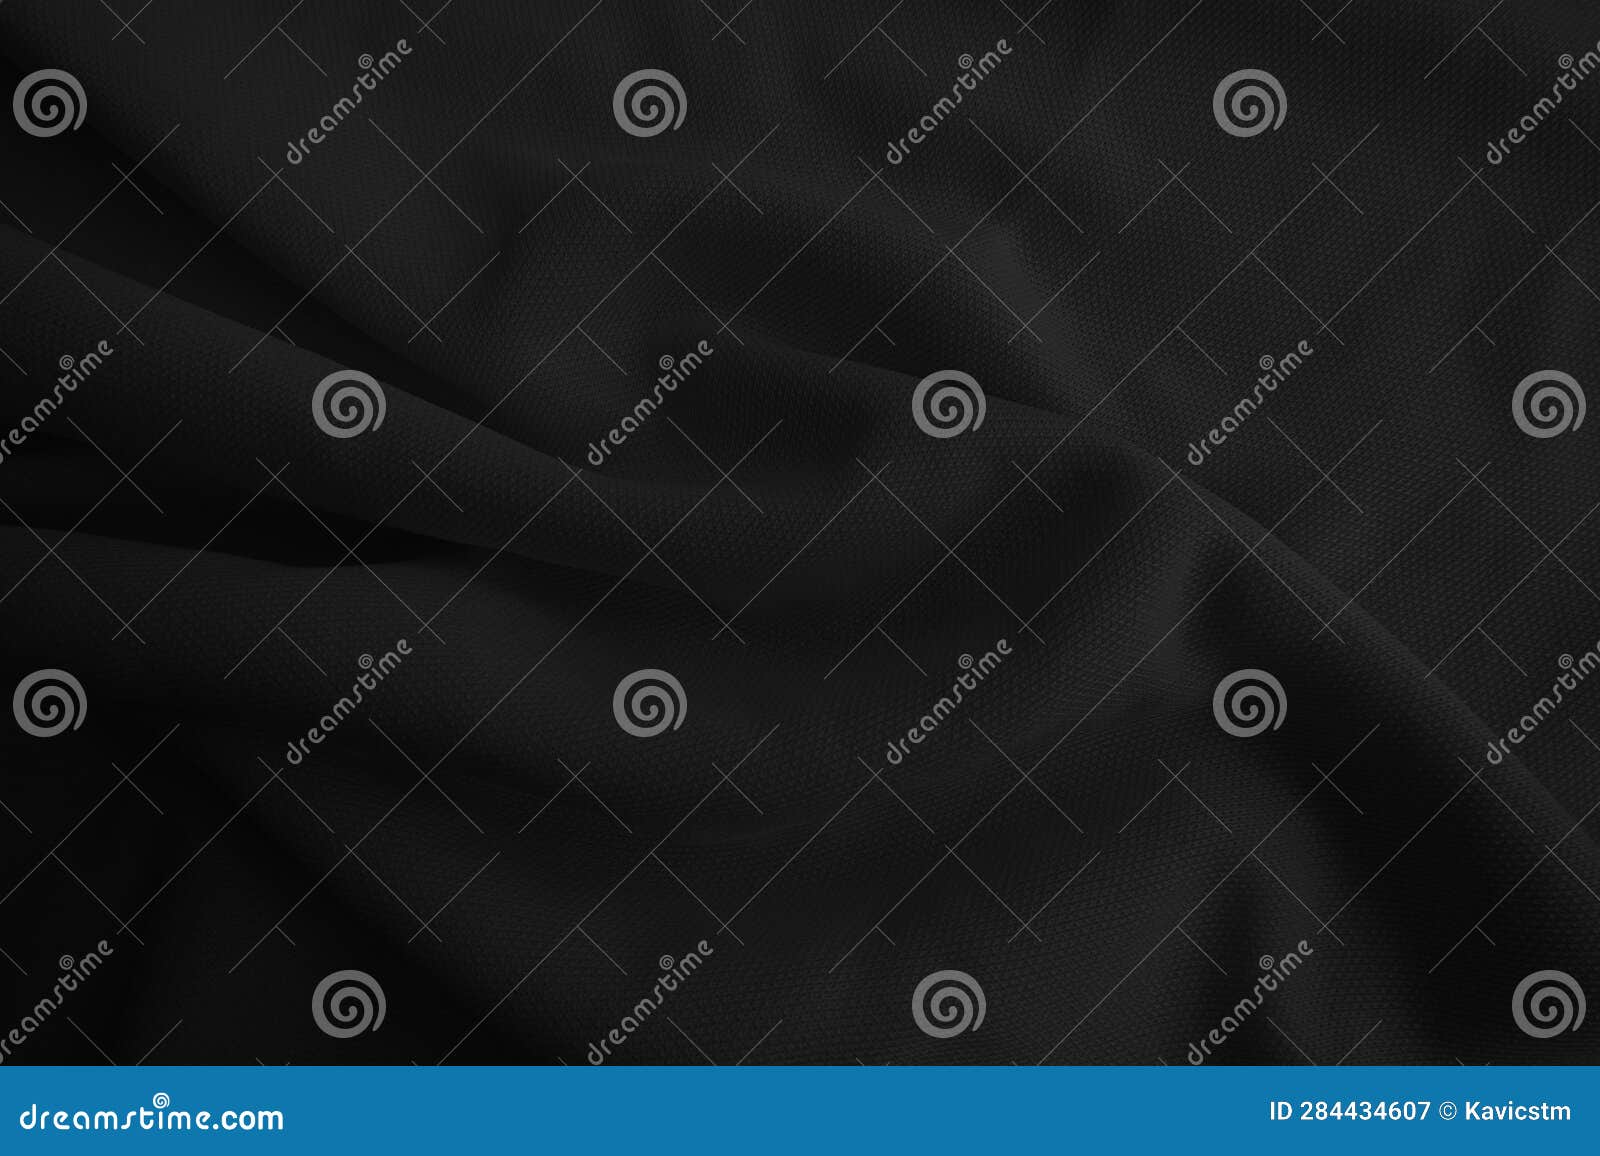 Black Wavy Cloth. Dark Fabric Background Stock Image - Image of ...